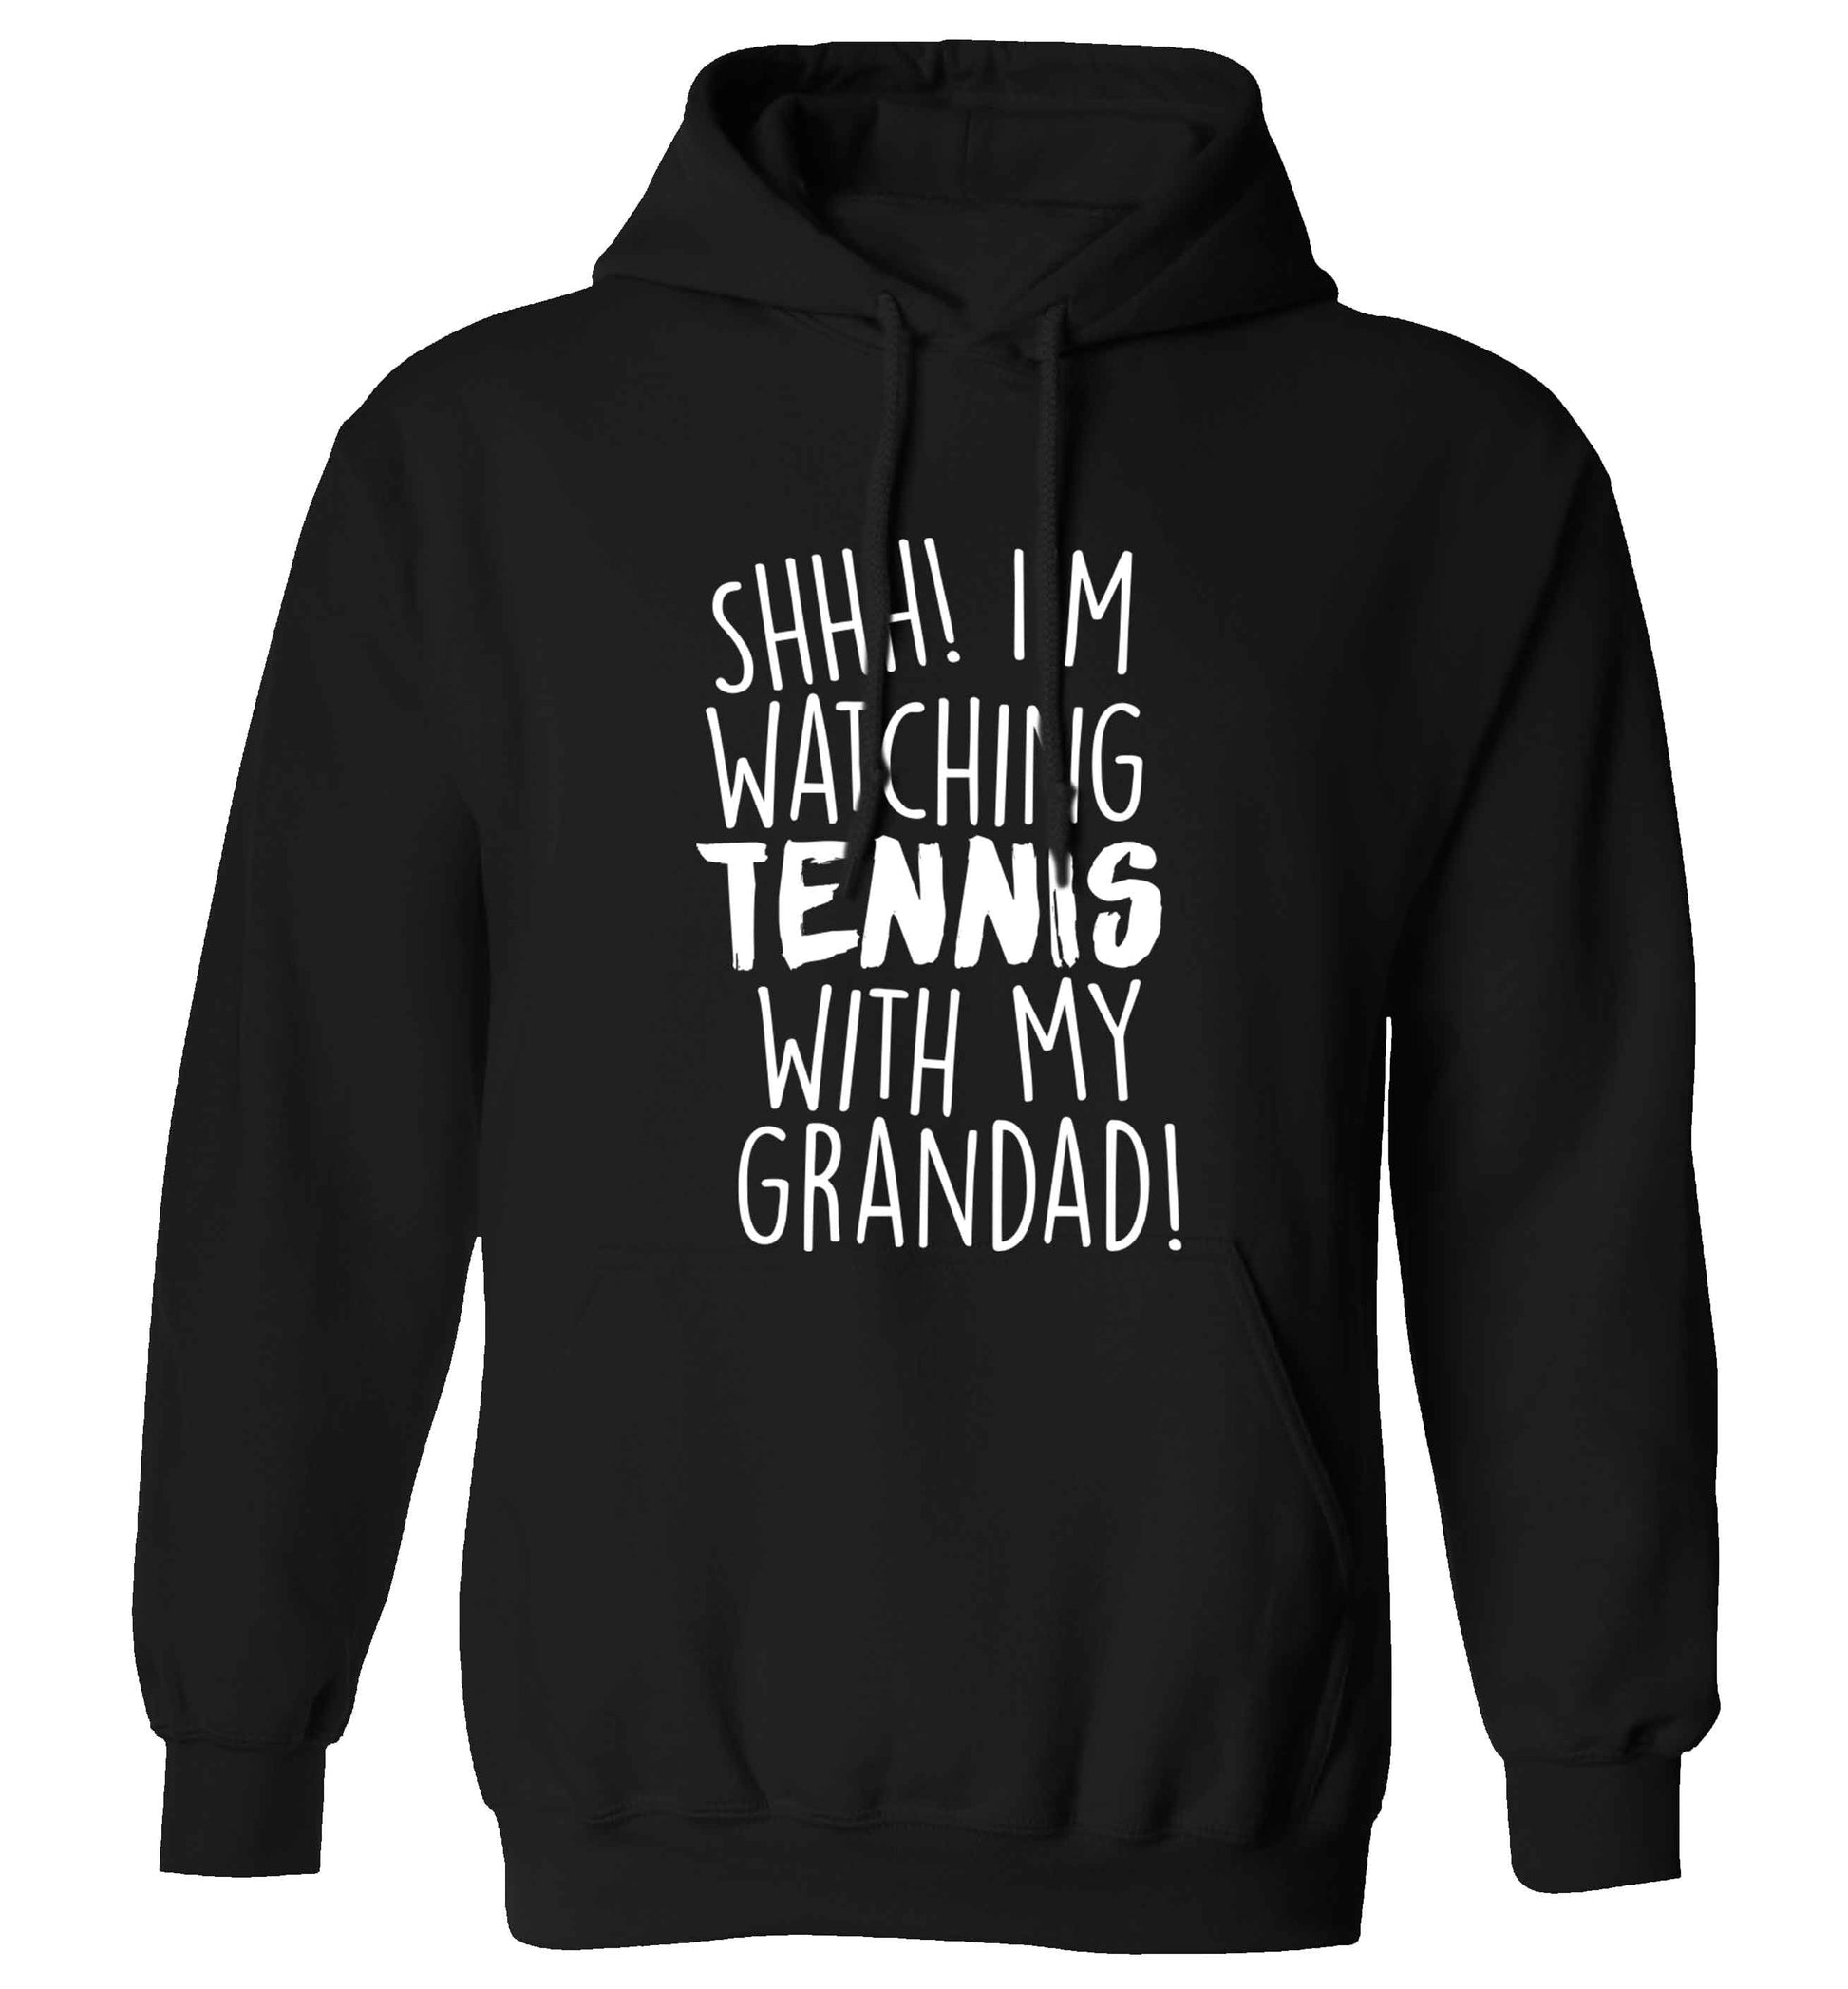 Shh! I'm watching tennis with my grandad! adults unisex black hoodie 2XL